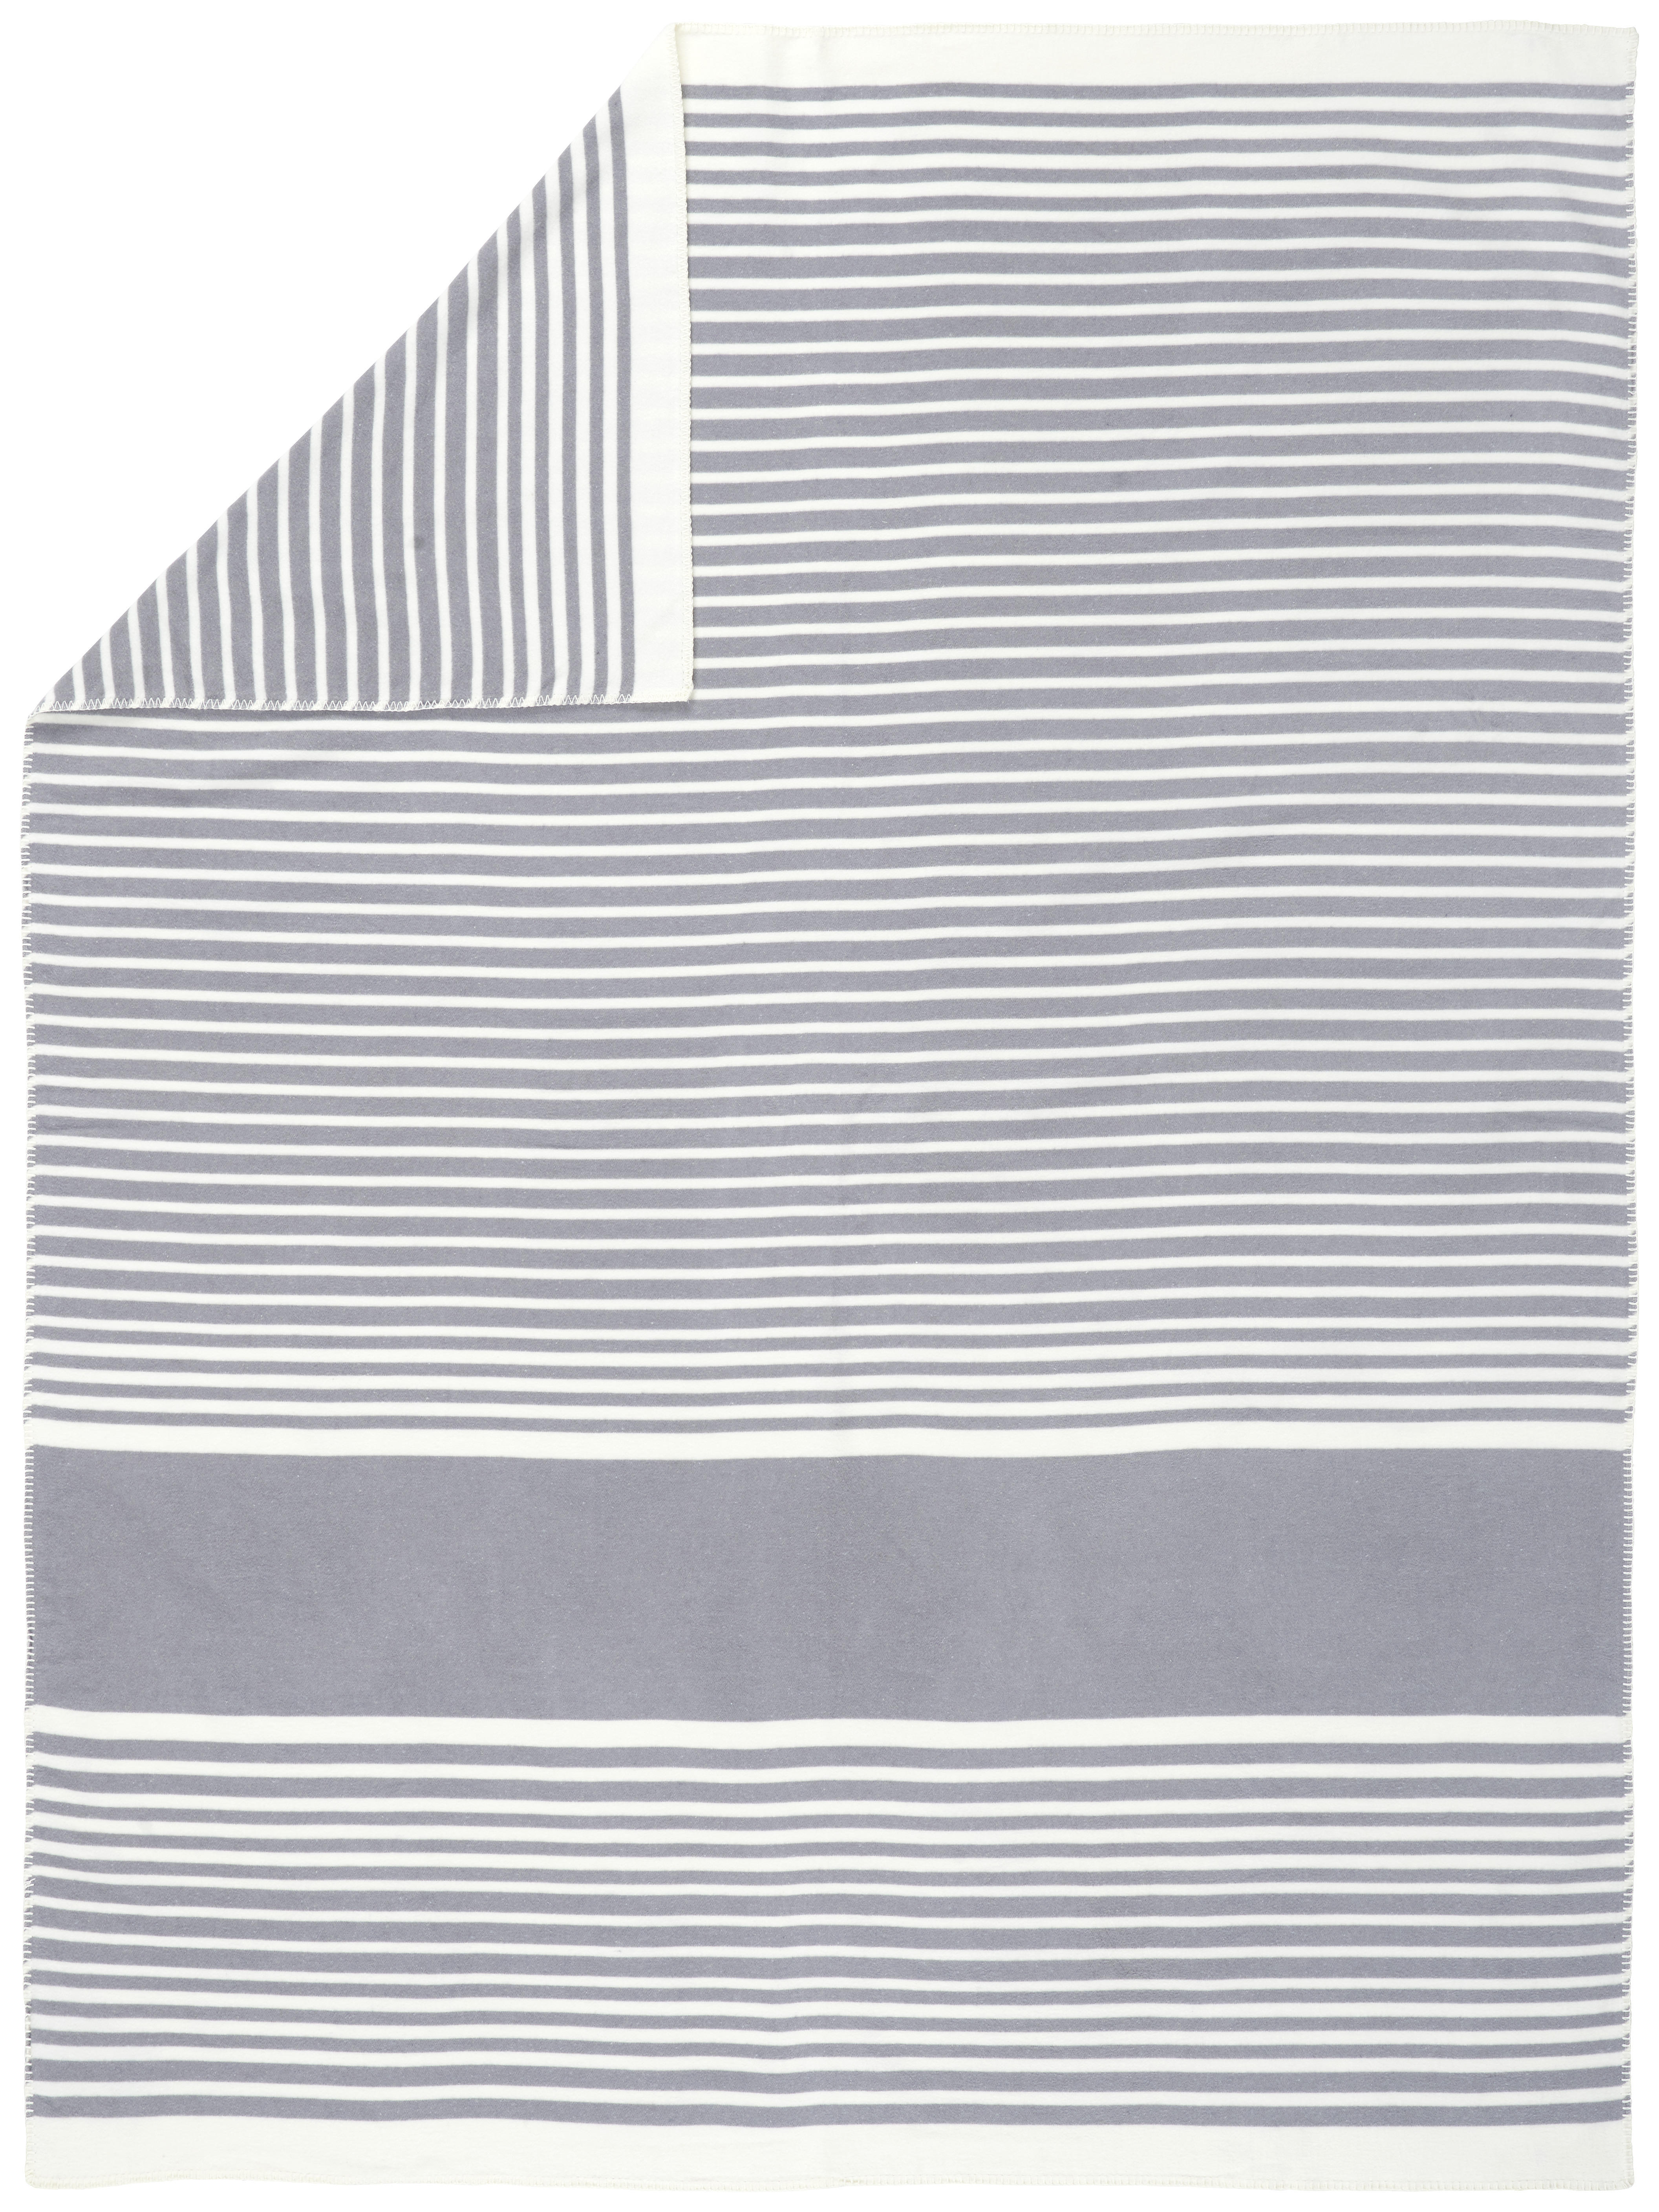 PLAID 150/200 cm  - Weiß/Grau, Design, Textil (150/200cm) - Bio:Vio